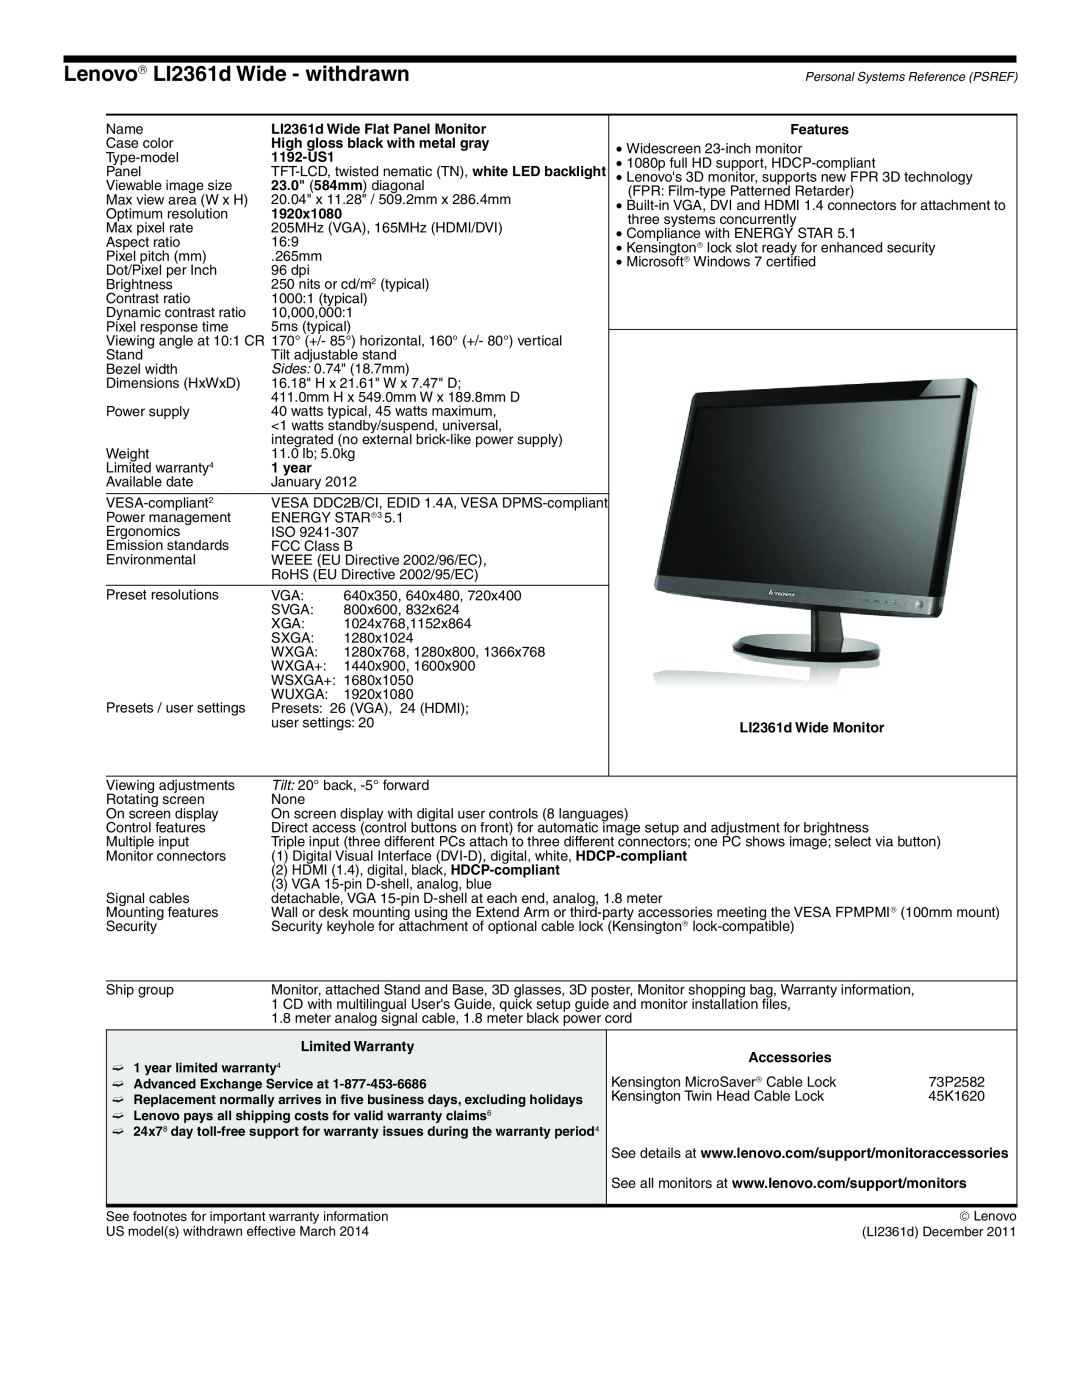 Lenovo L2363D manual Lenovo→ LI2361d Wide - withdrawn 